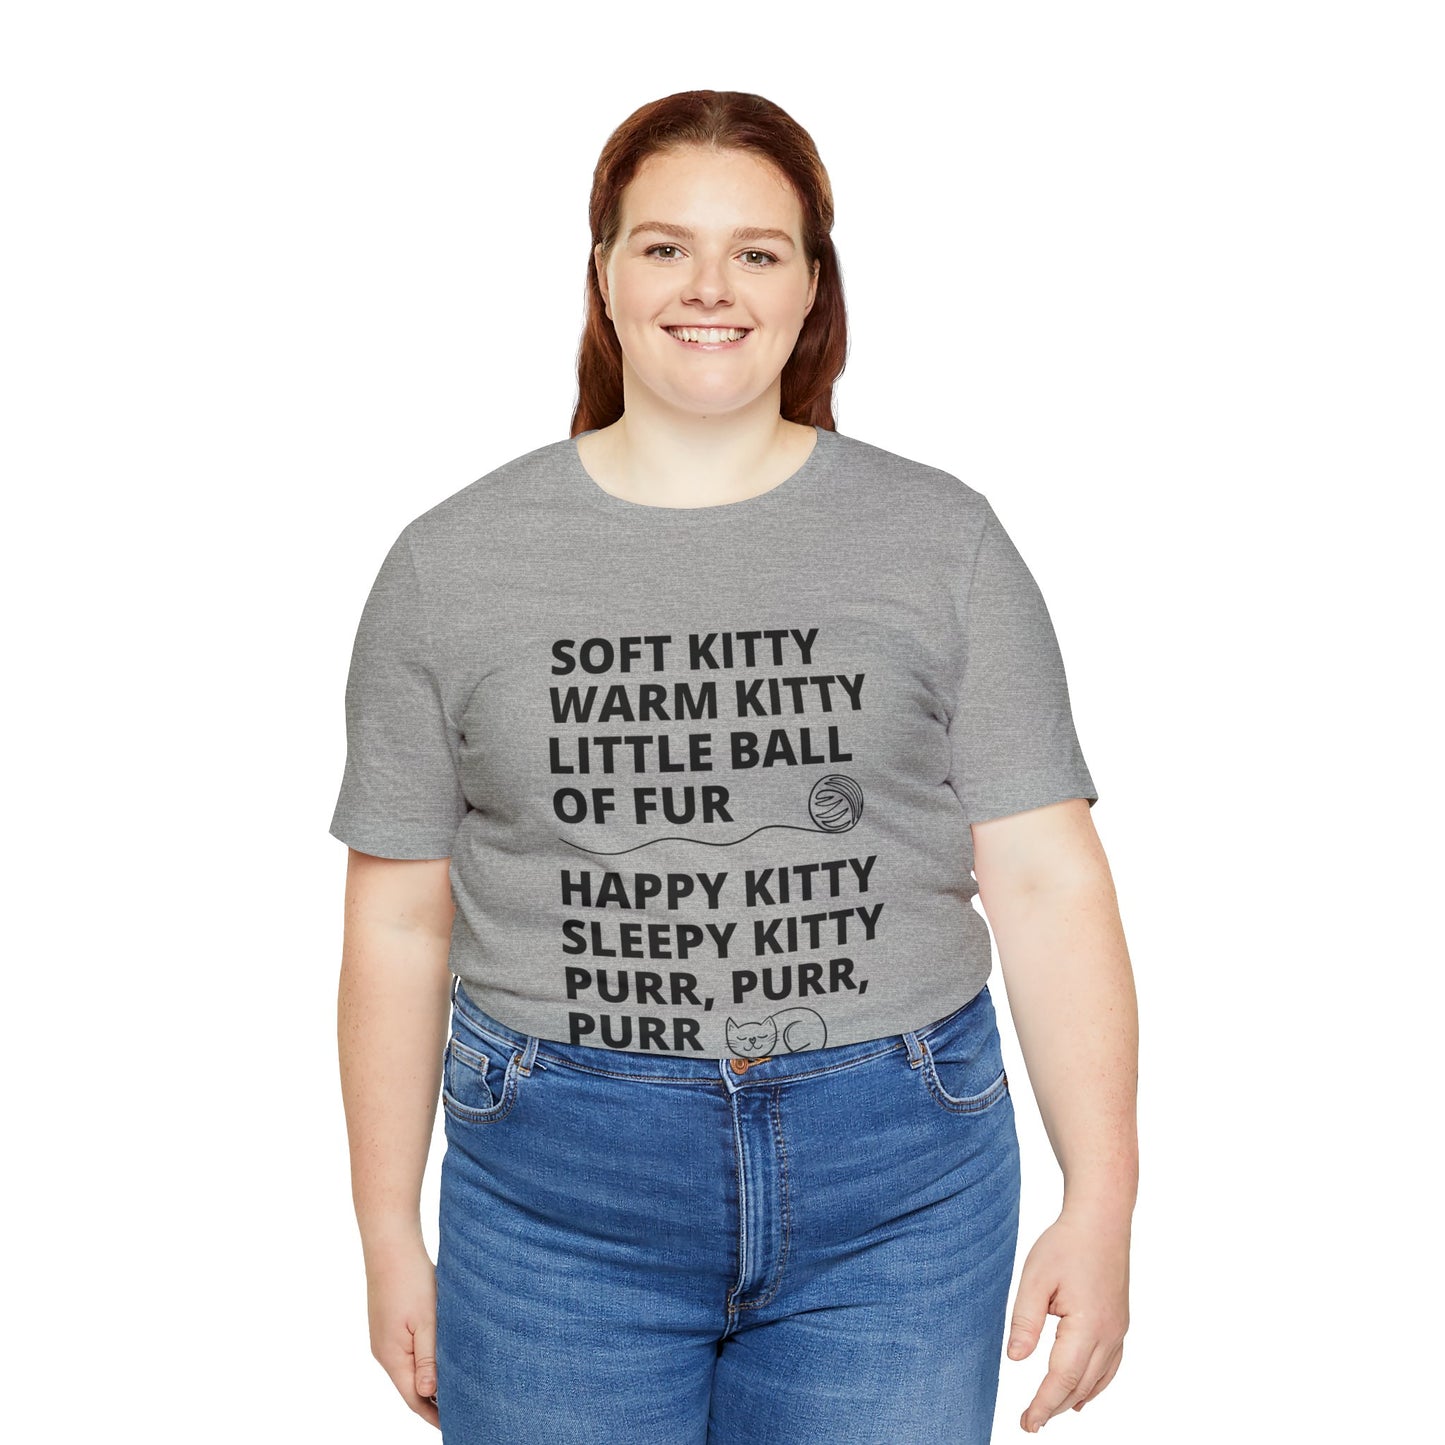 Soft Kitty Warm Kitty Unisex T-shirt - Big Bang Theory